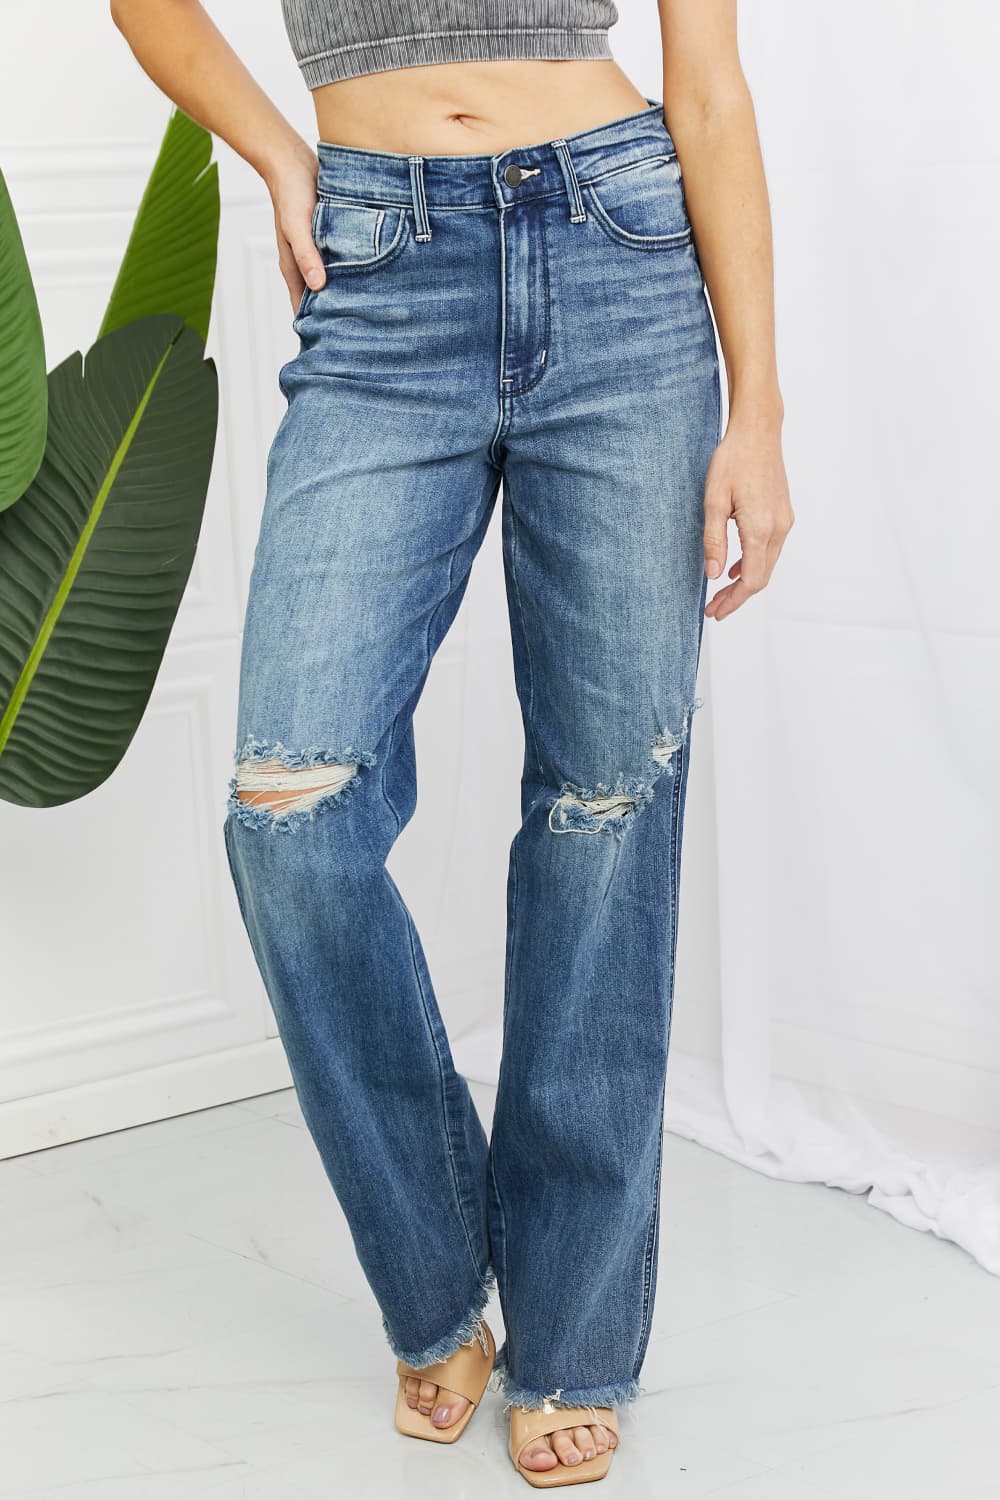 Judy Blue Becka Full Size Mid Rise Straight Jeans MS231013034843F0(24) Medium / 0(24)